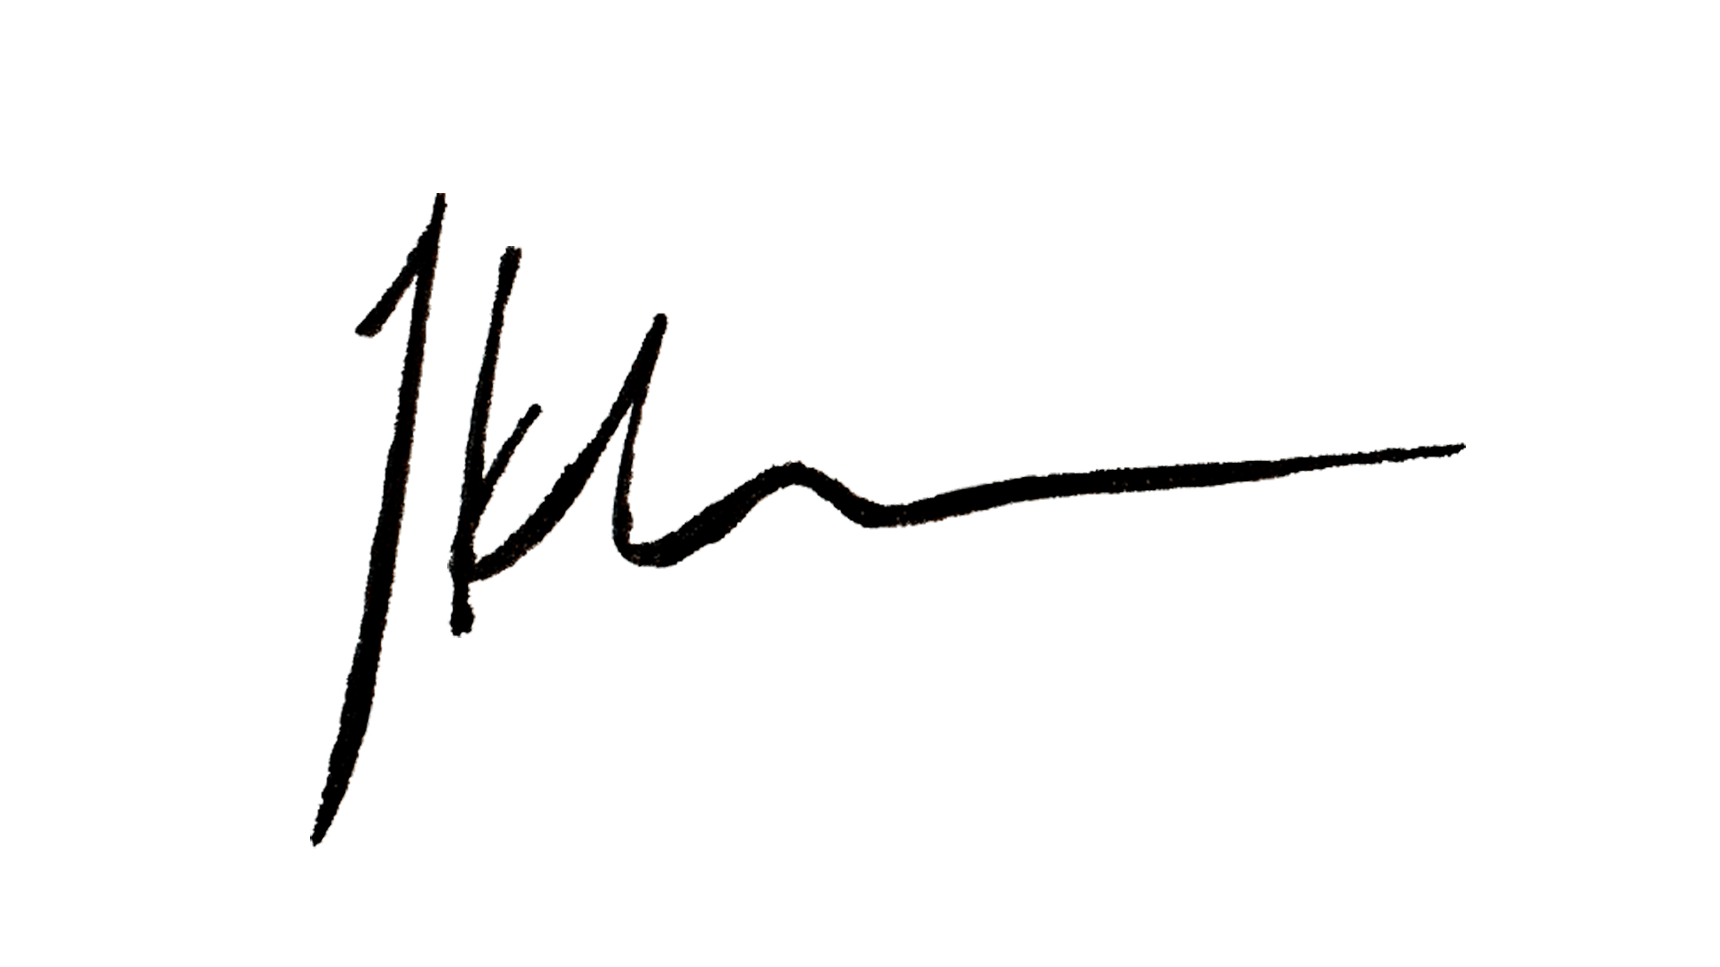 The signature of Jockum Klenell